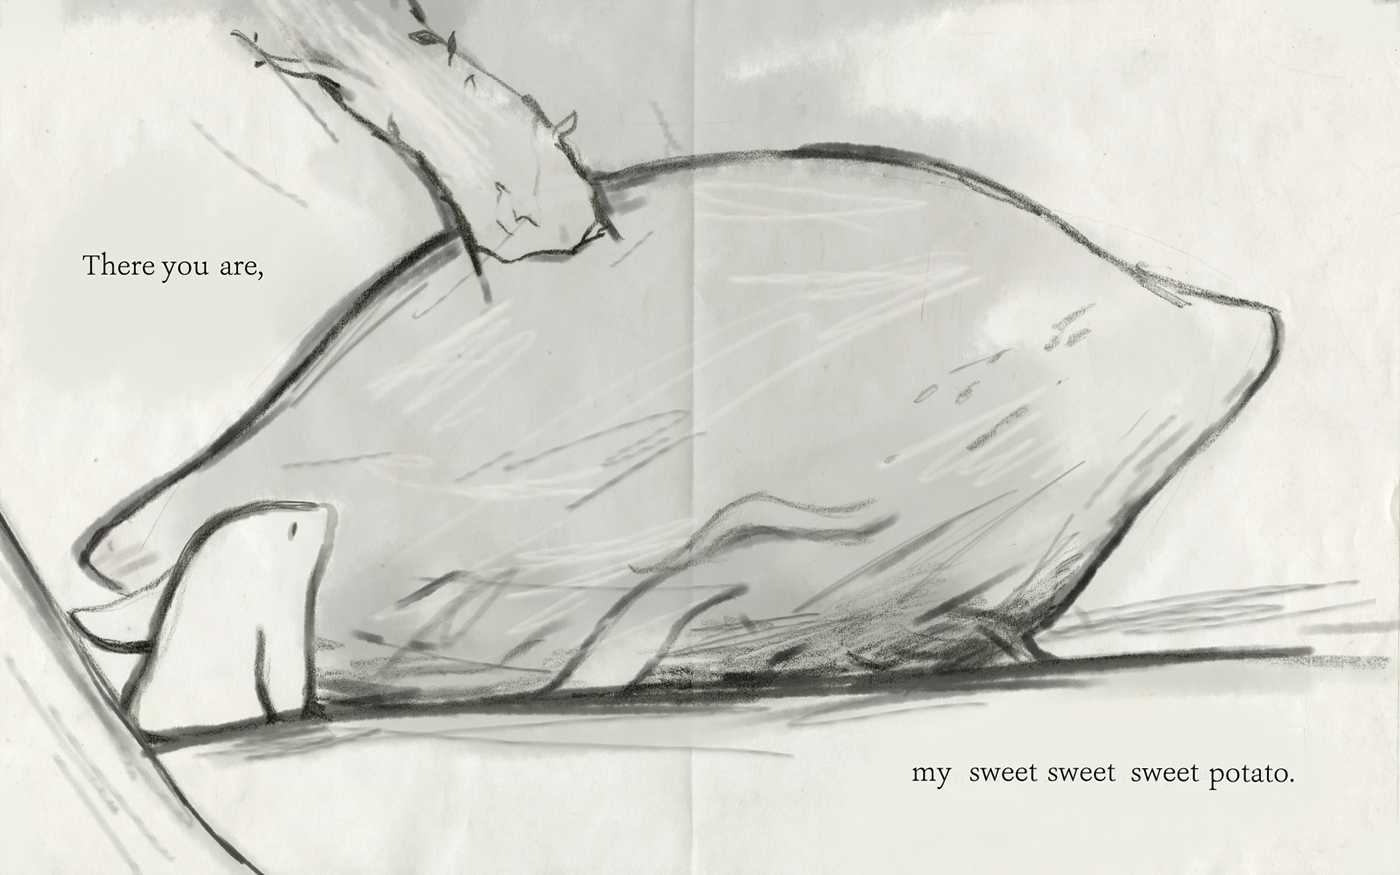 watercolor children's book text story Mole